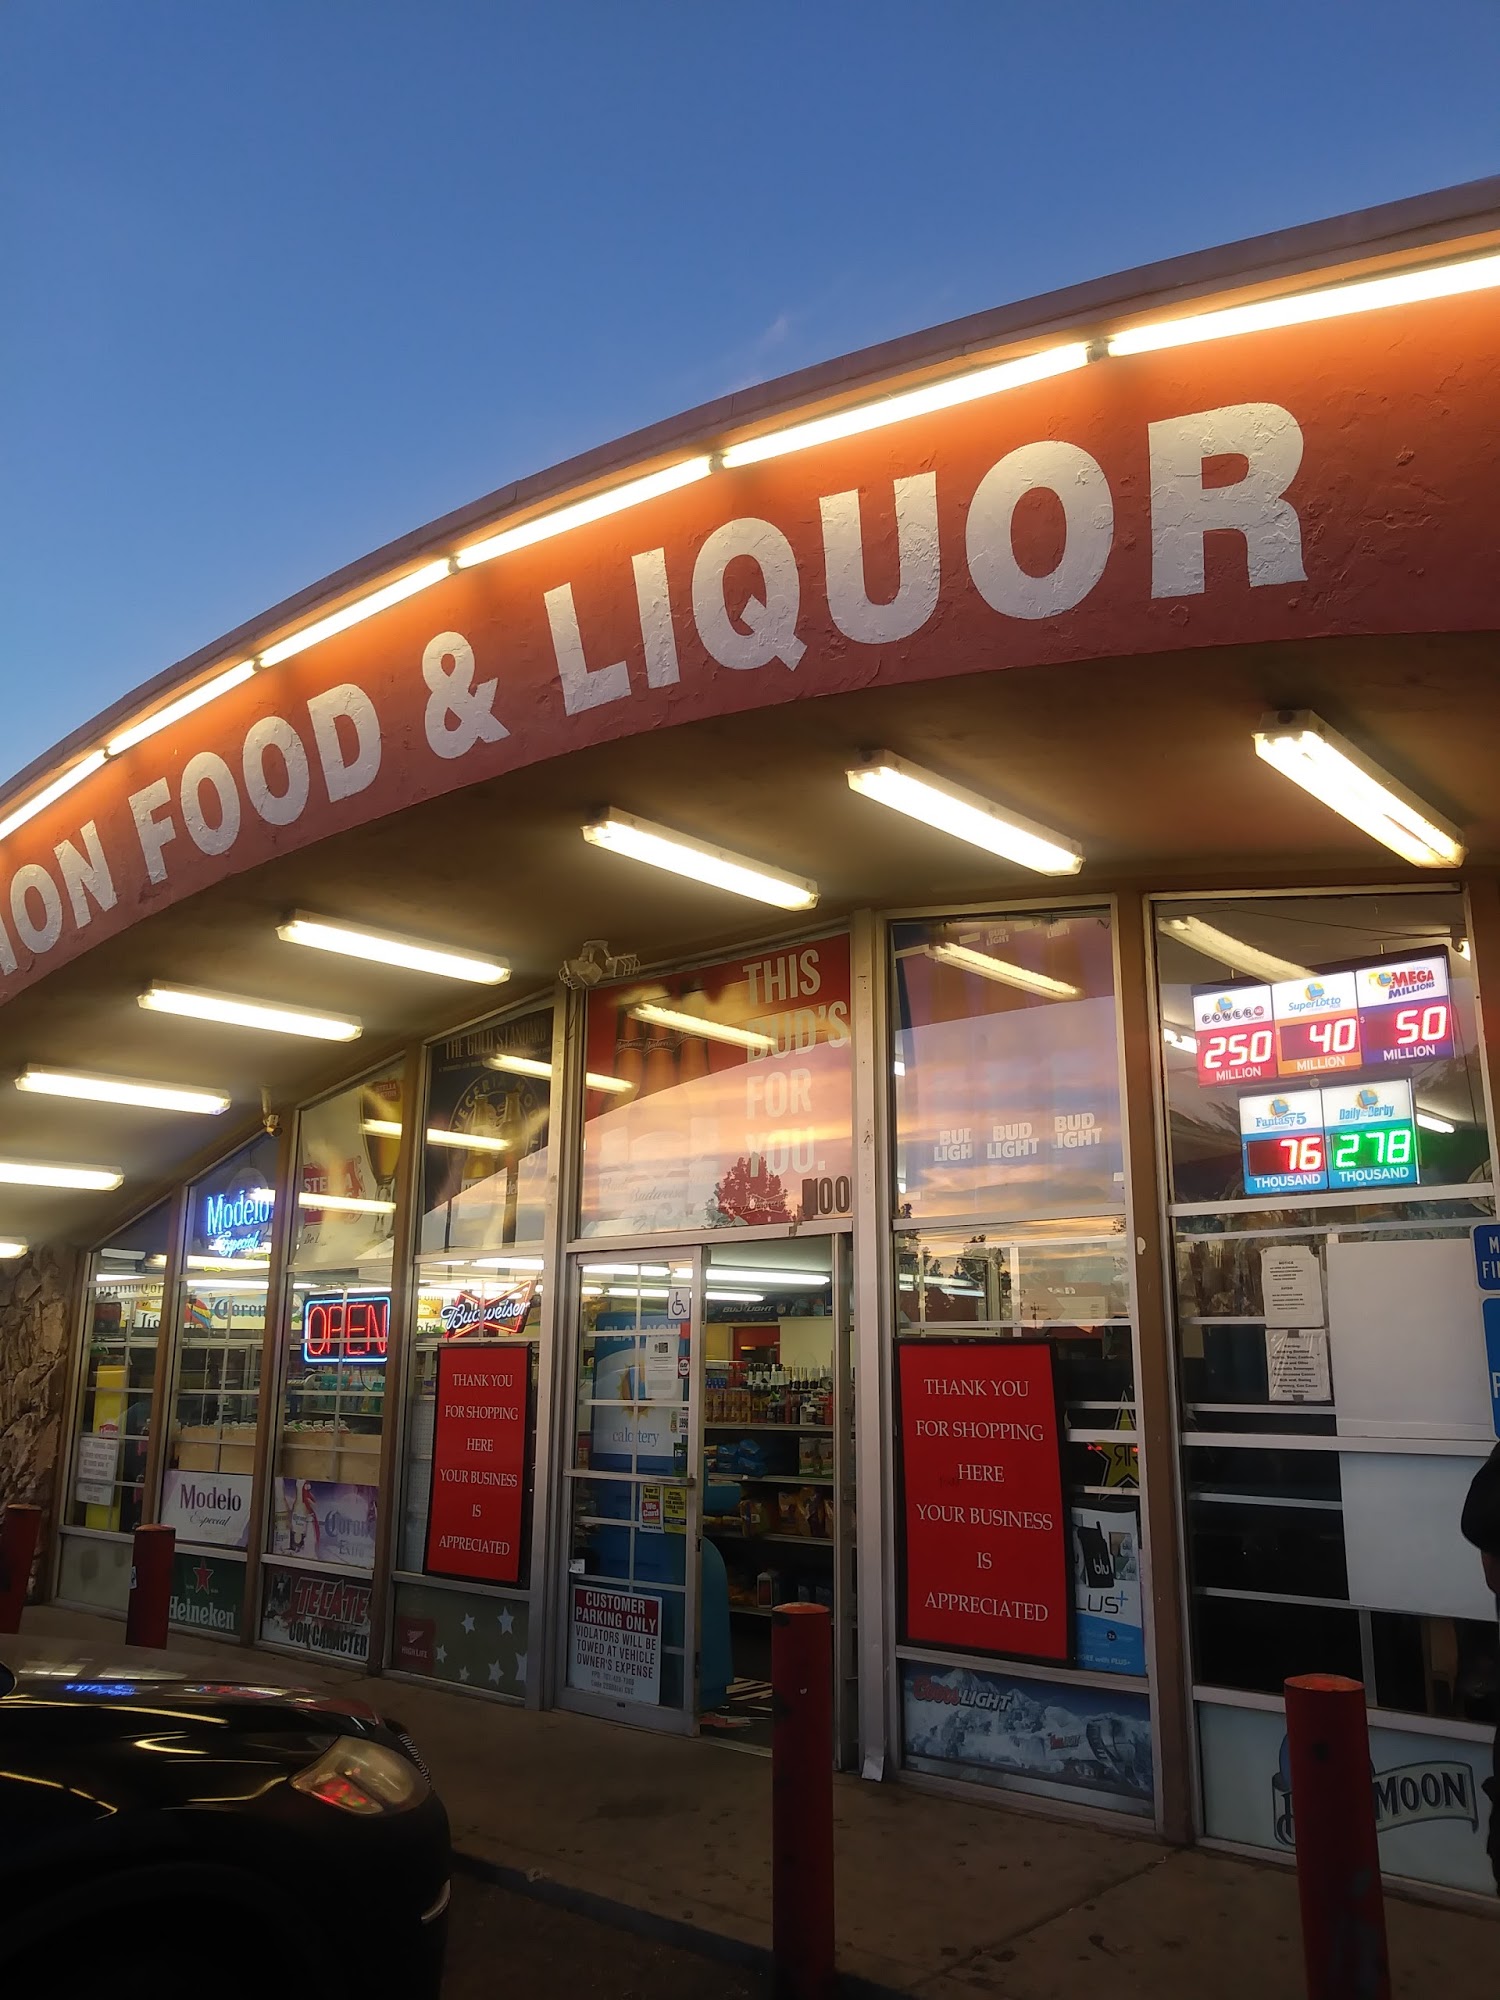 Union Food & Liquor